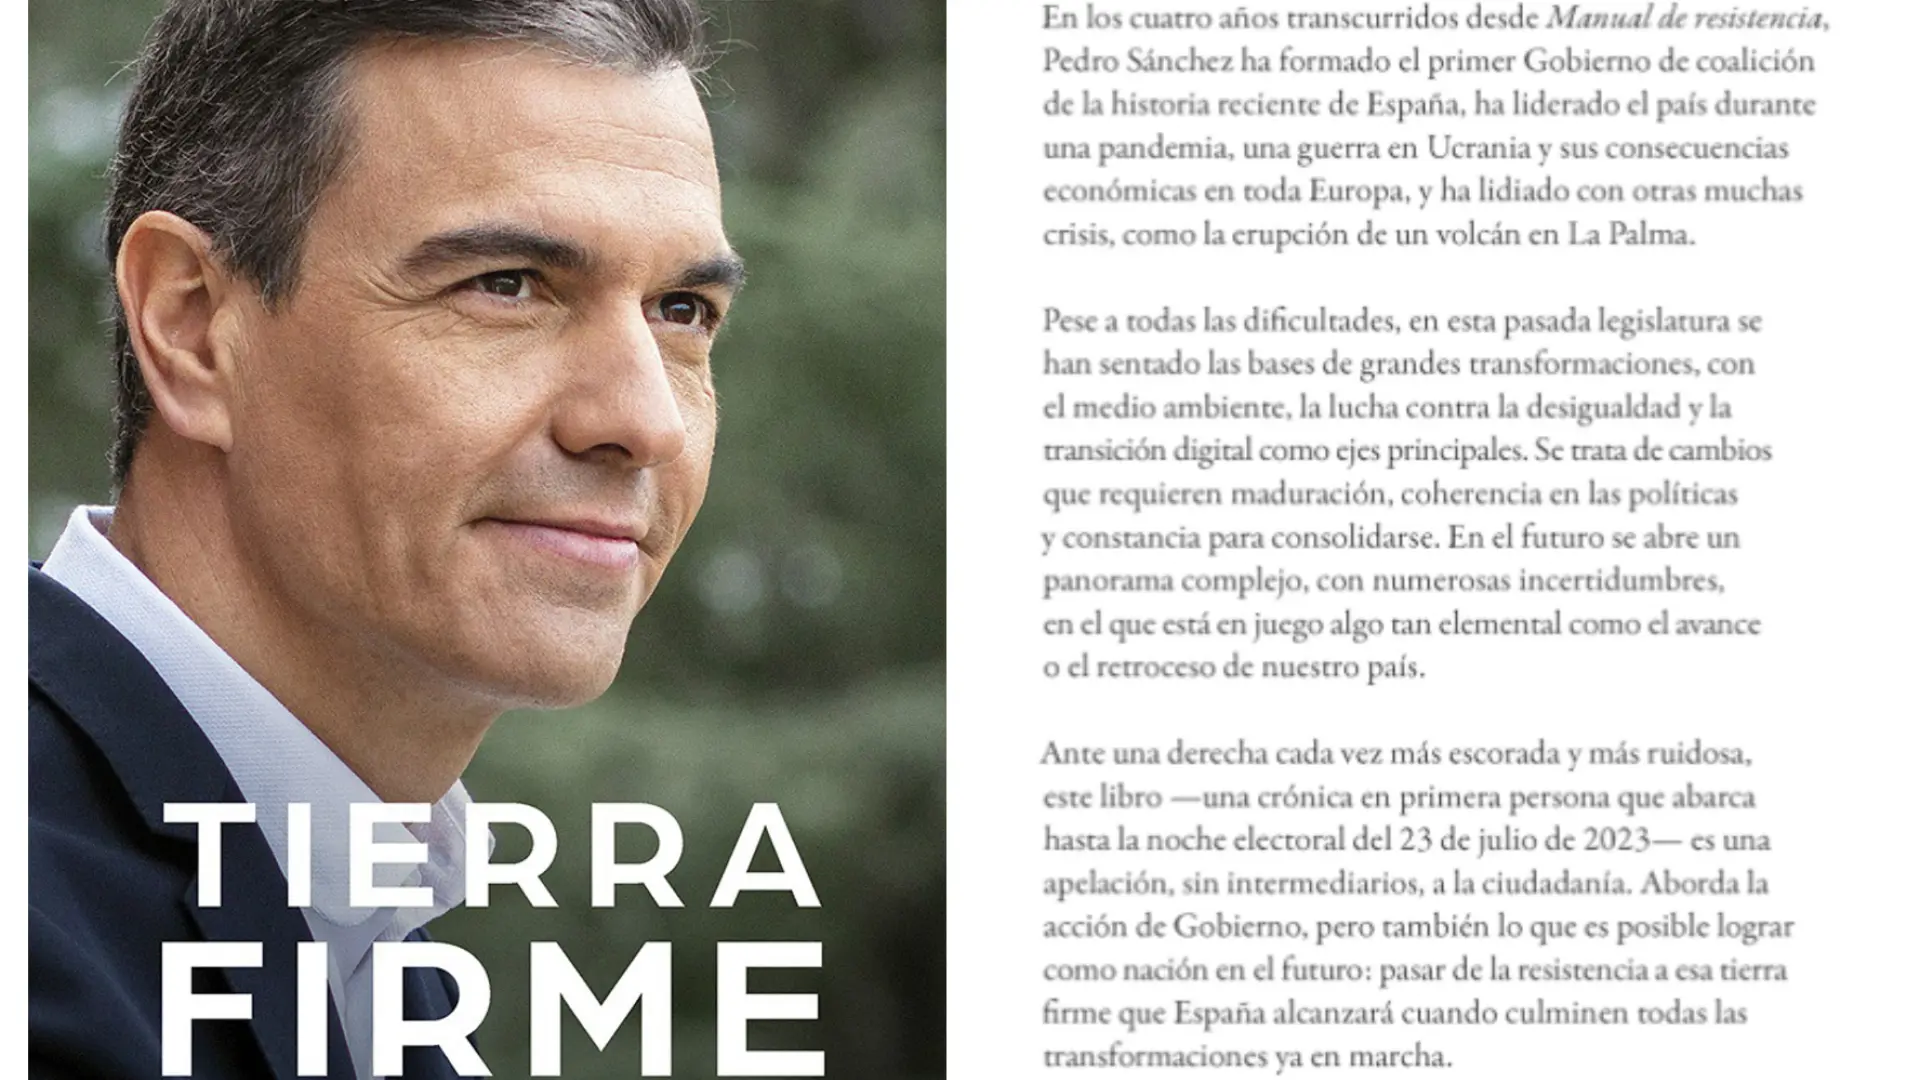 Tierra Firme de Pedro Sánchez - Análisis Político Revelador